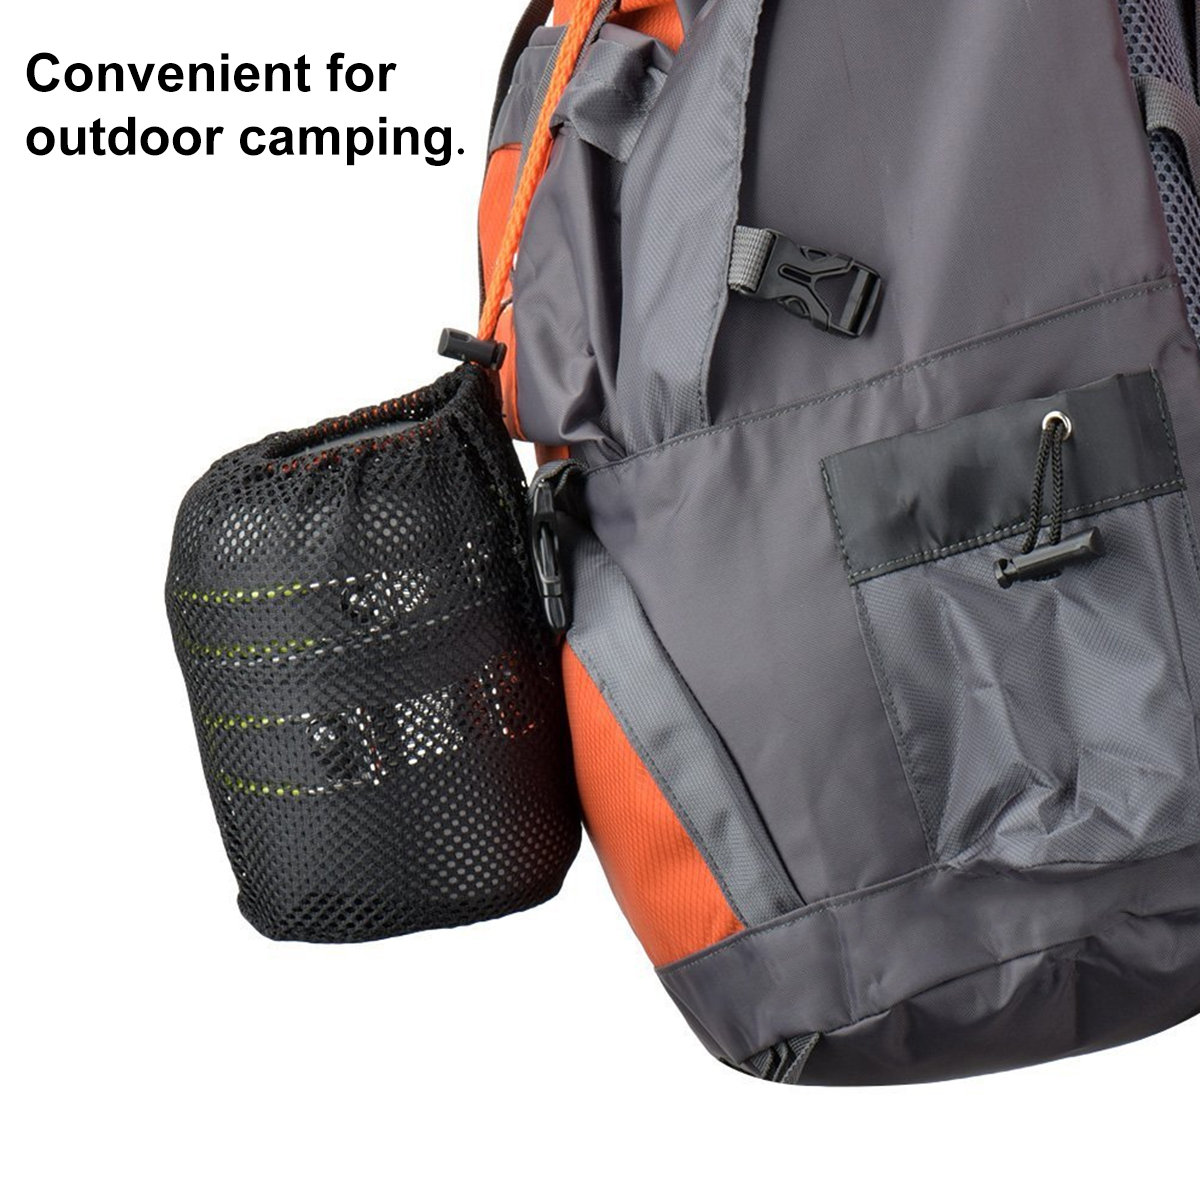 Portable-Backpacking-Outdoor-Picnic-Set-Hiking-Cookware-Camping-Pot-Bowl-Stove-Set-Burner-1452239-6